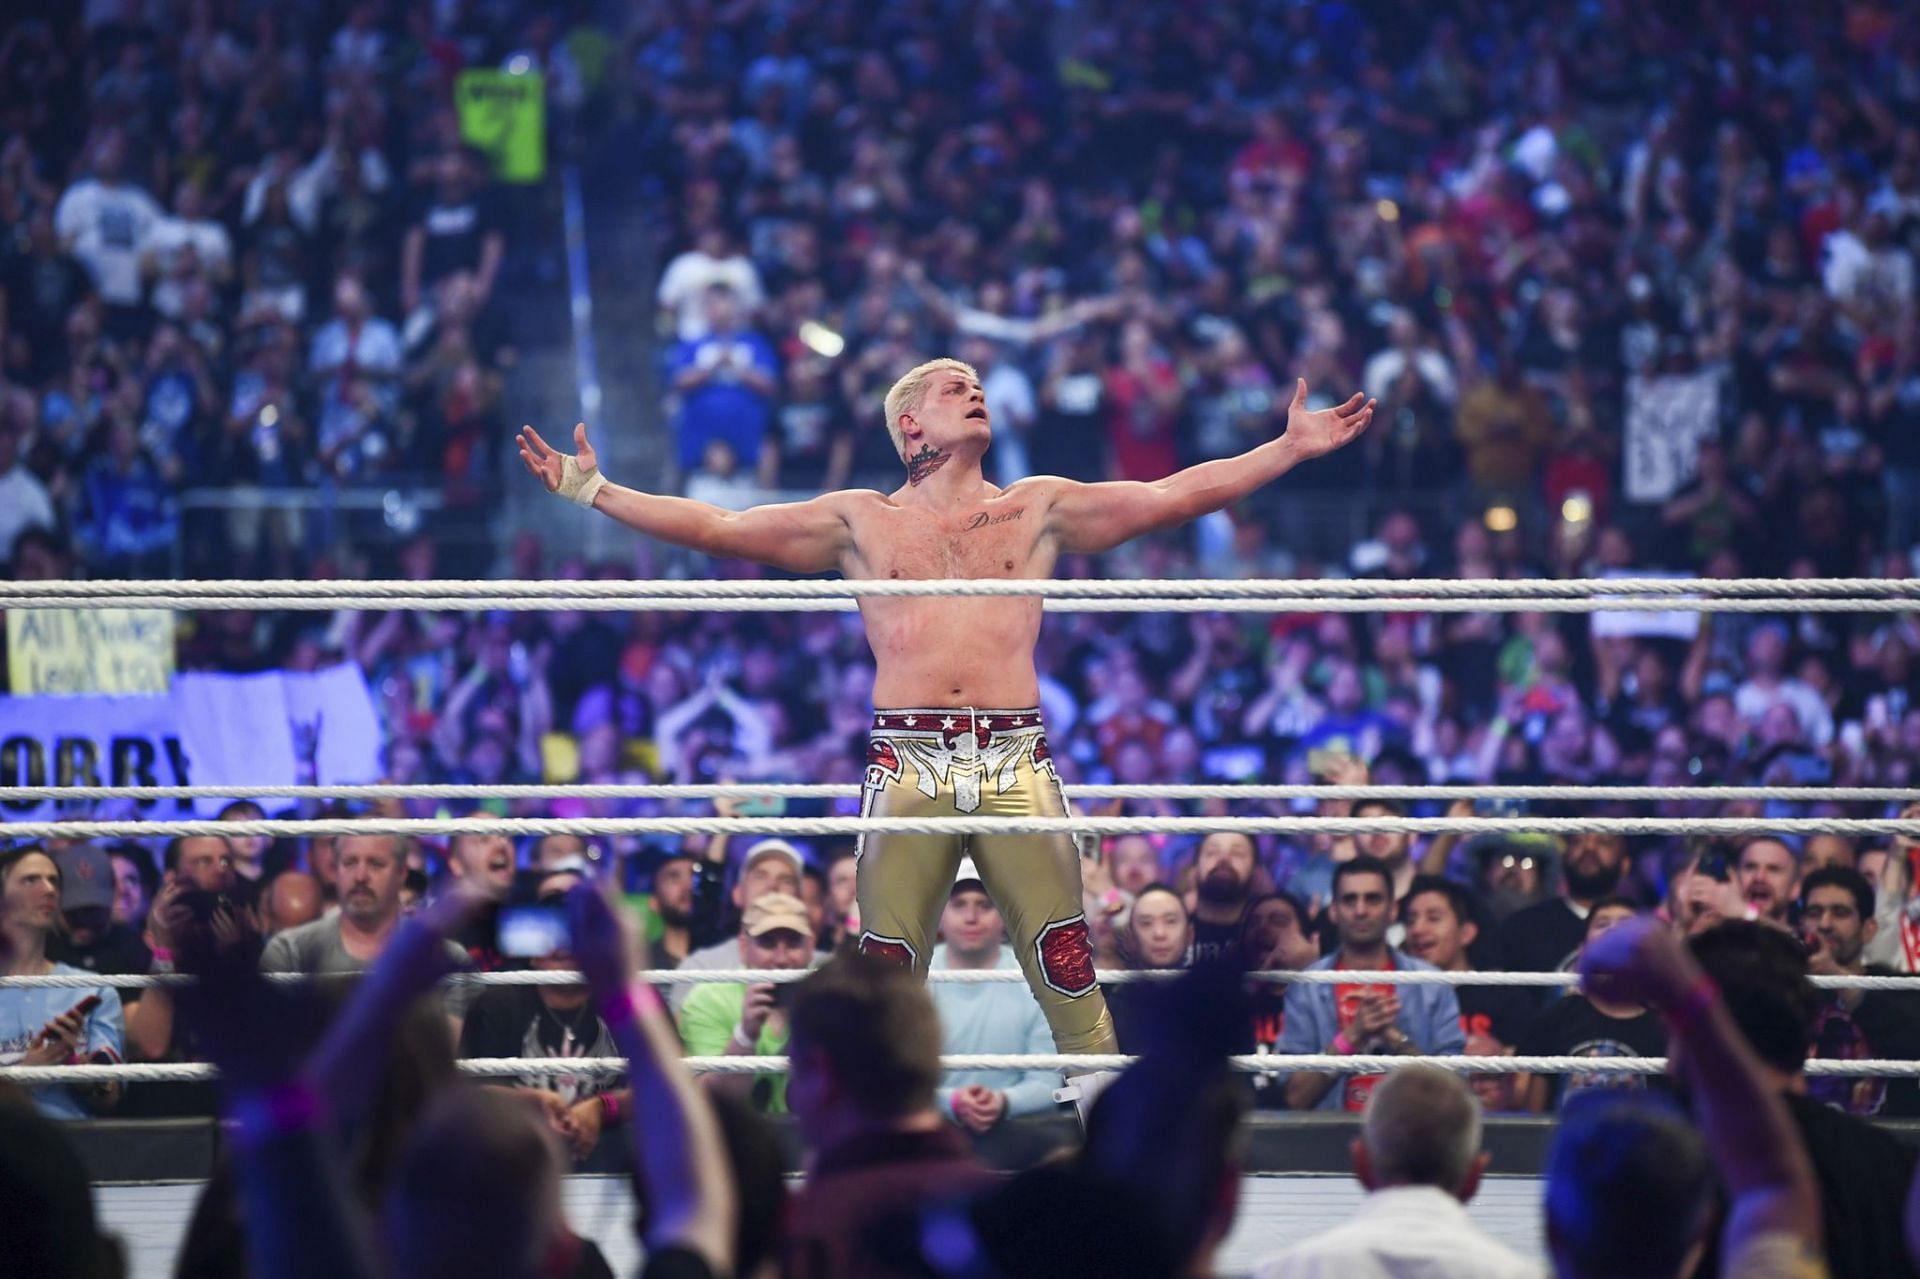 Cody Rhodes made a triumphant return to WWE